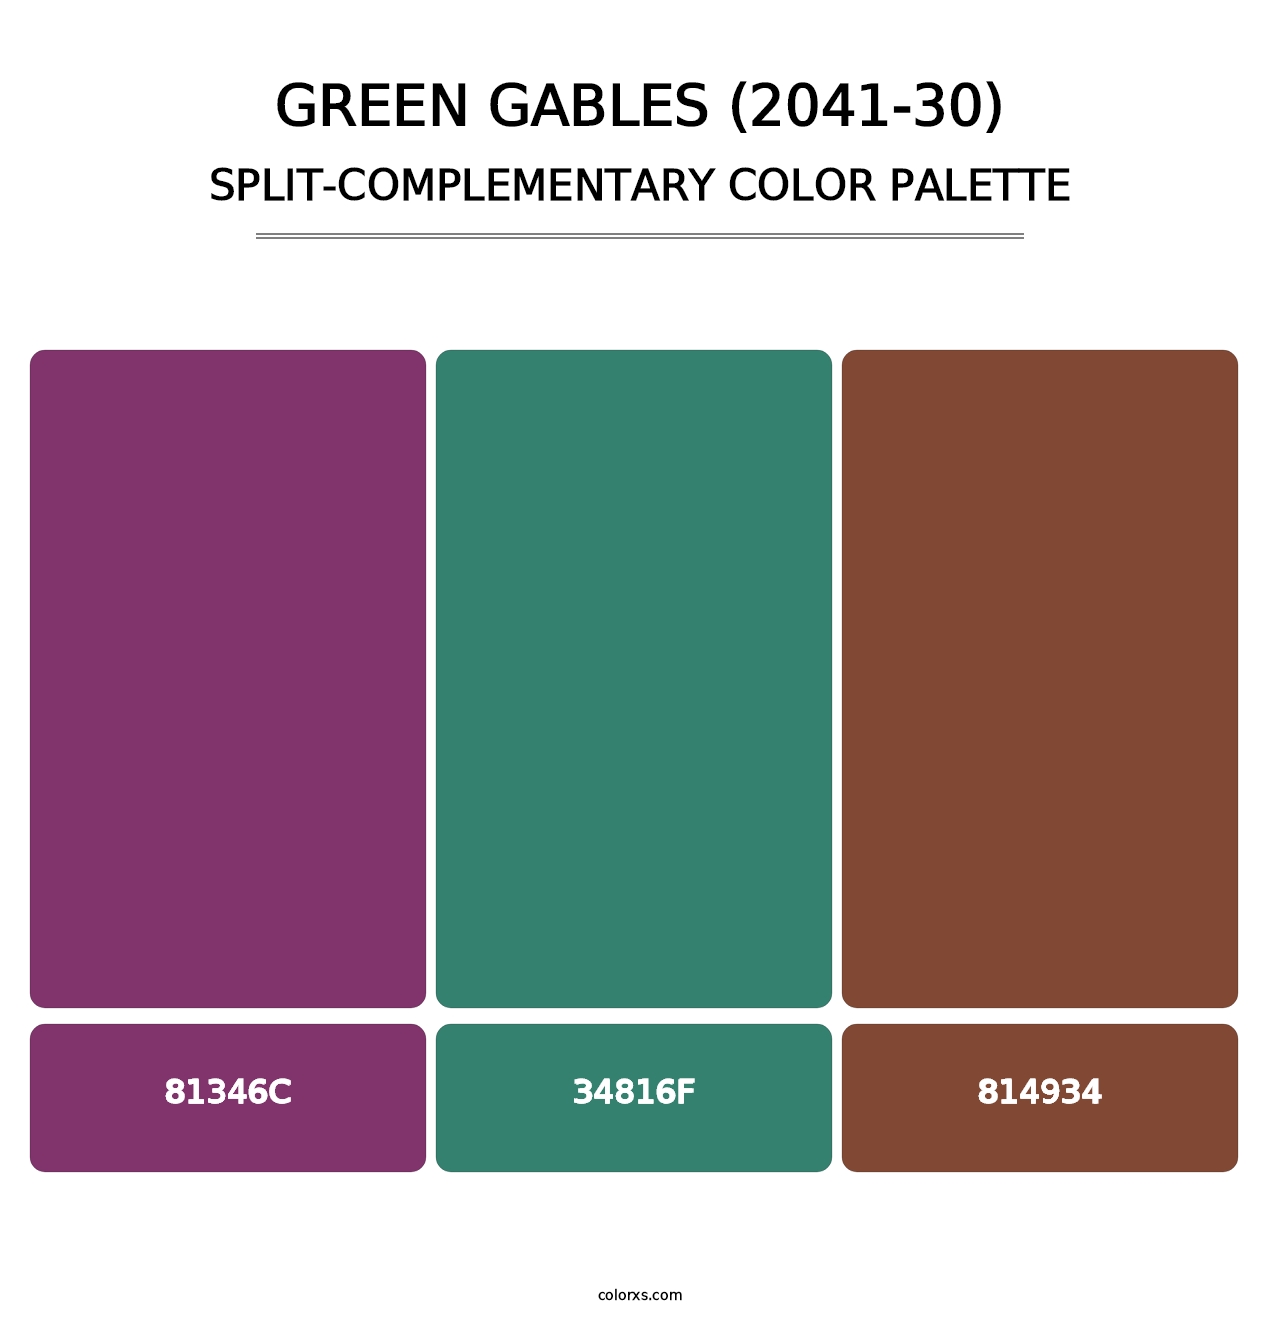 Green Gables (2041-30) - Split-Complementary Color Palette